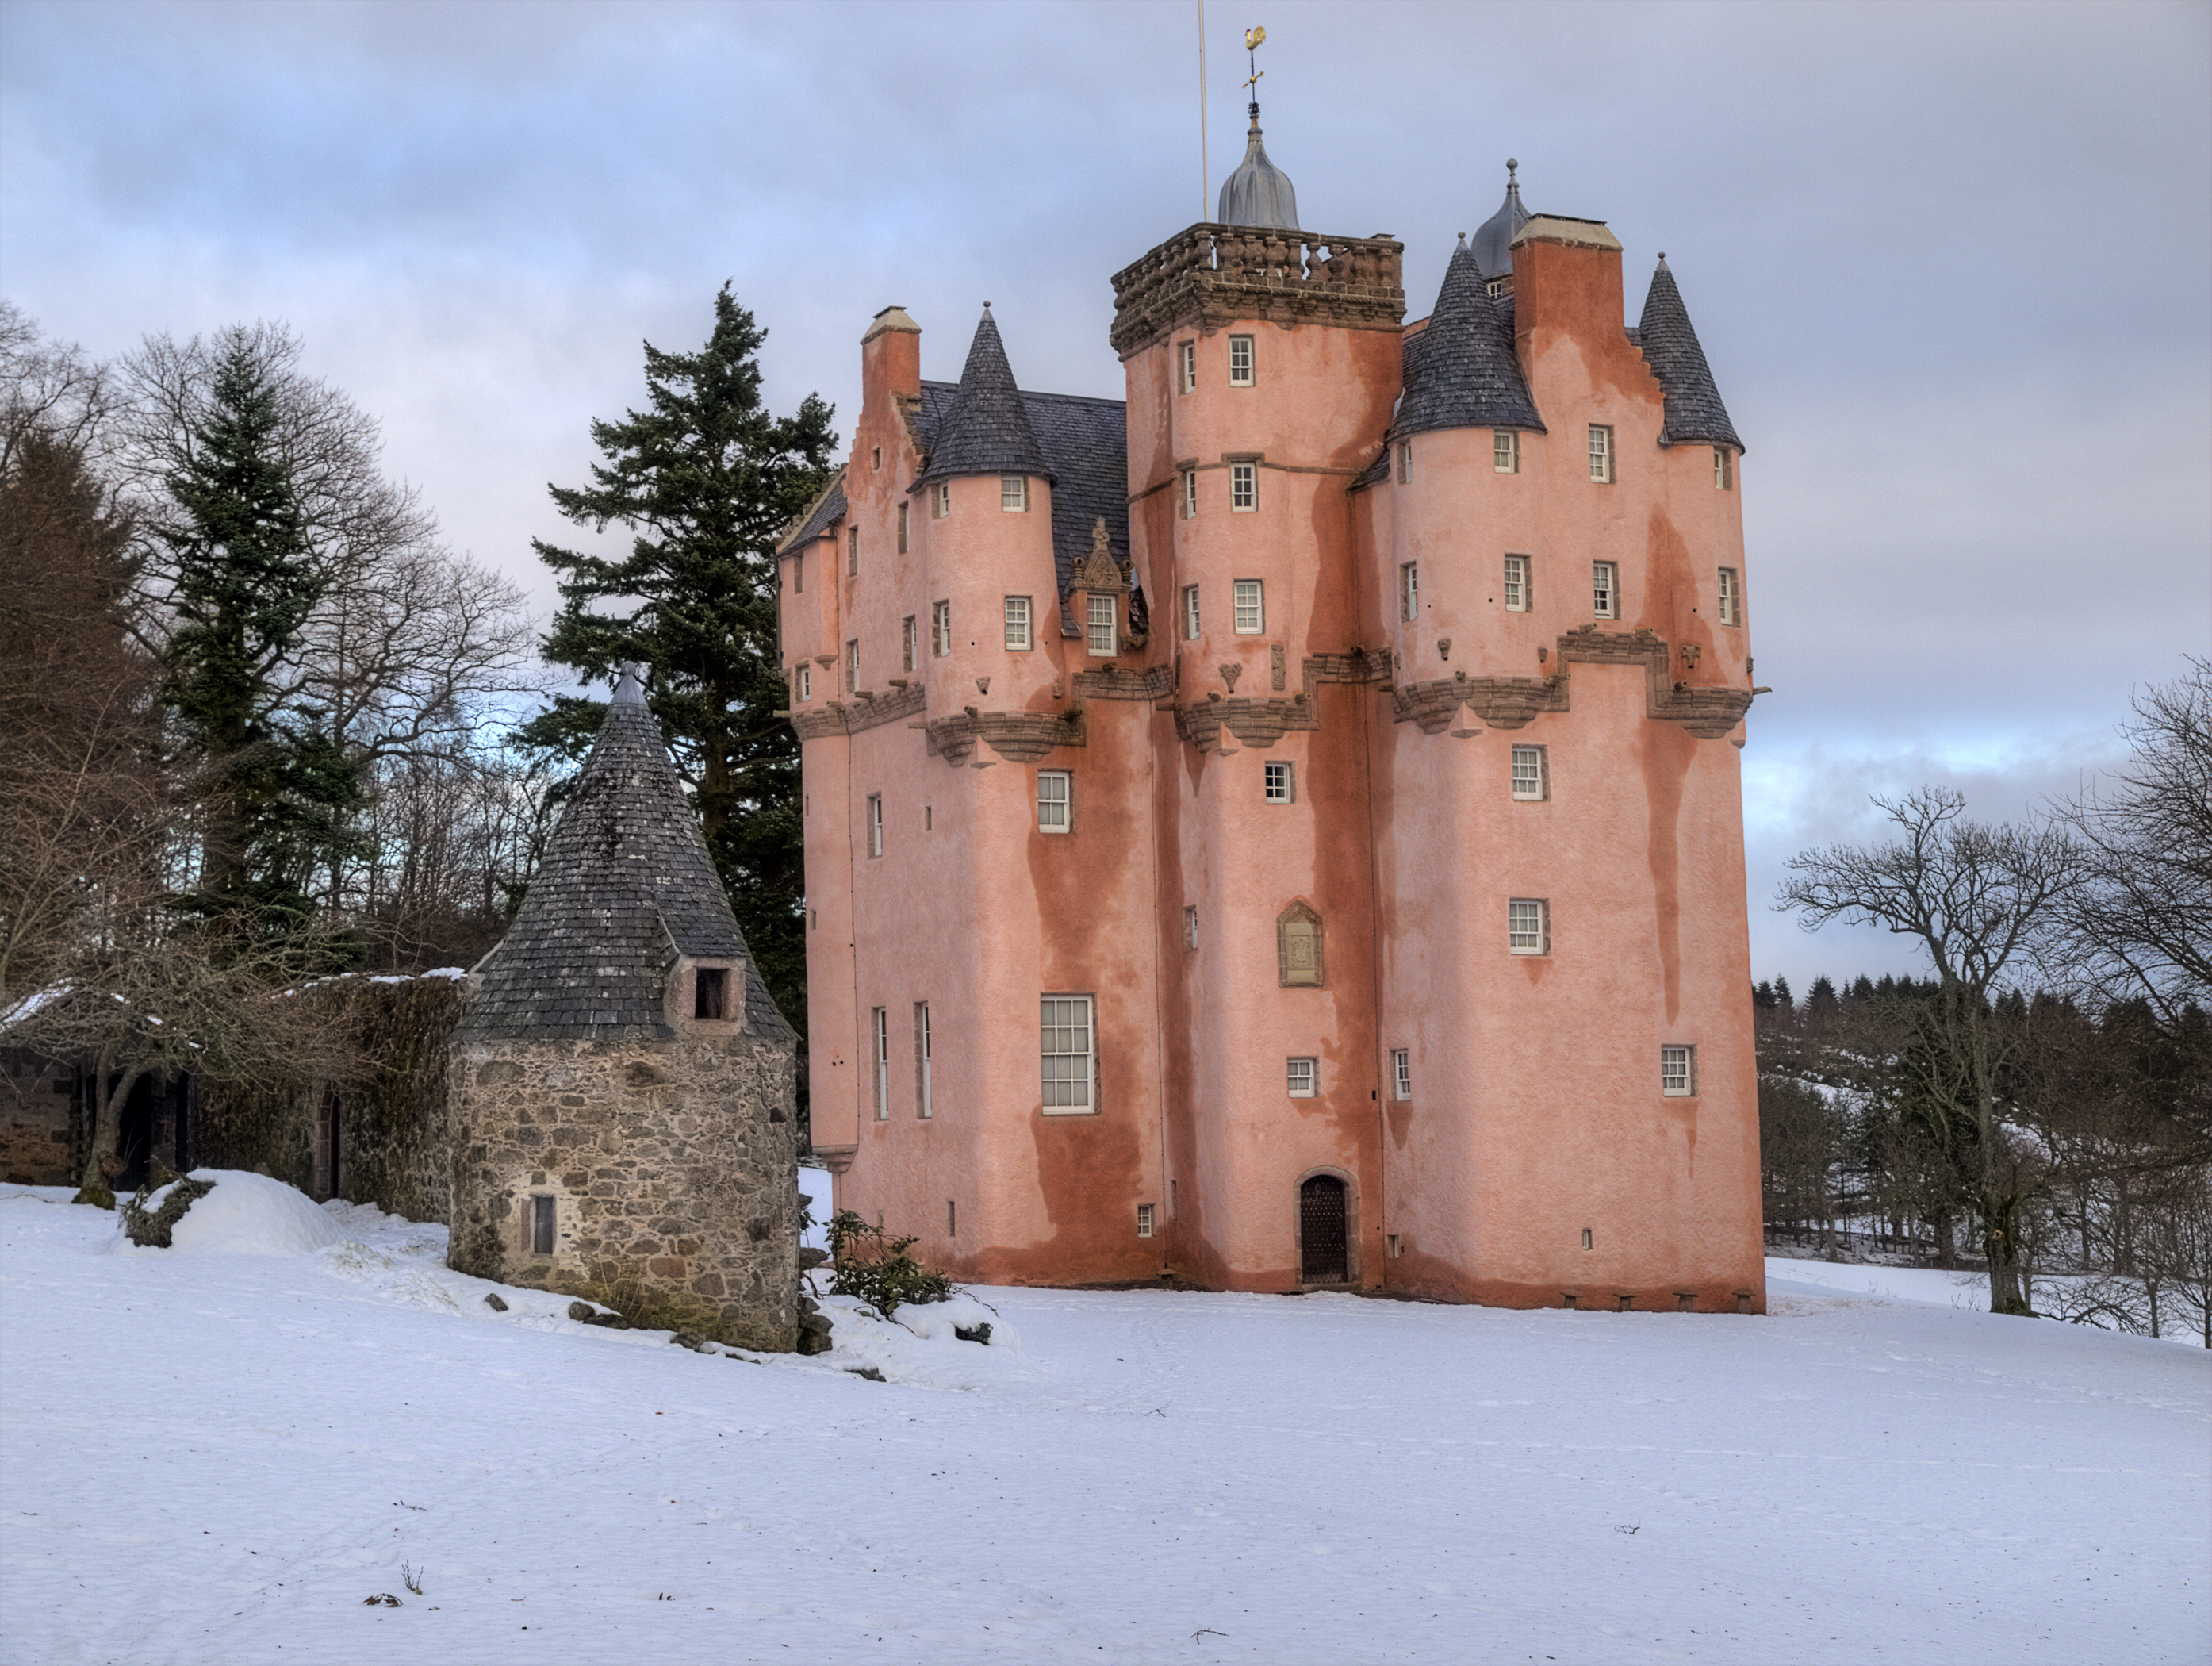 Craigievar Castle, in winter snow.